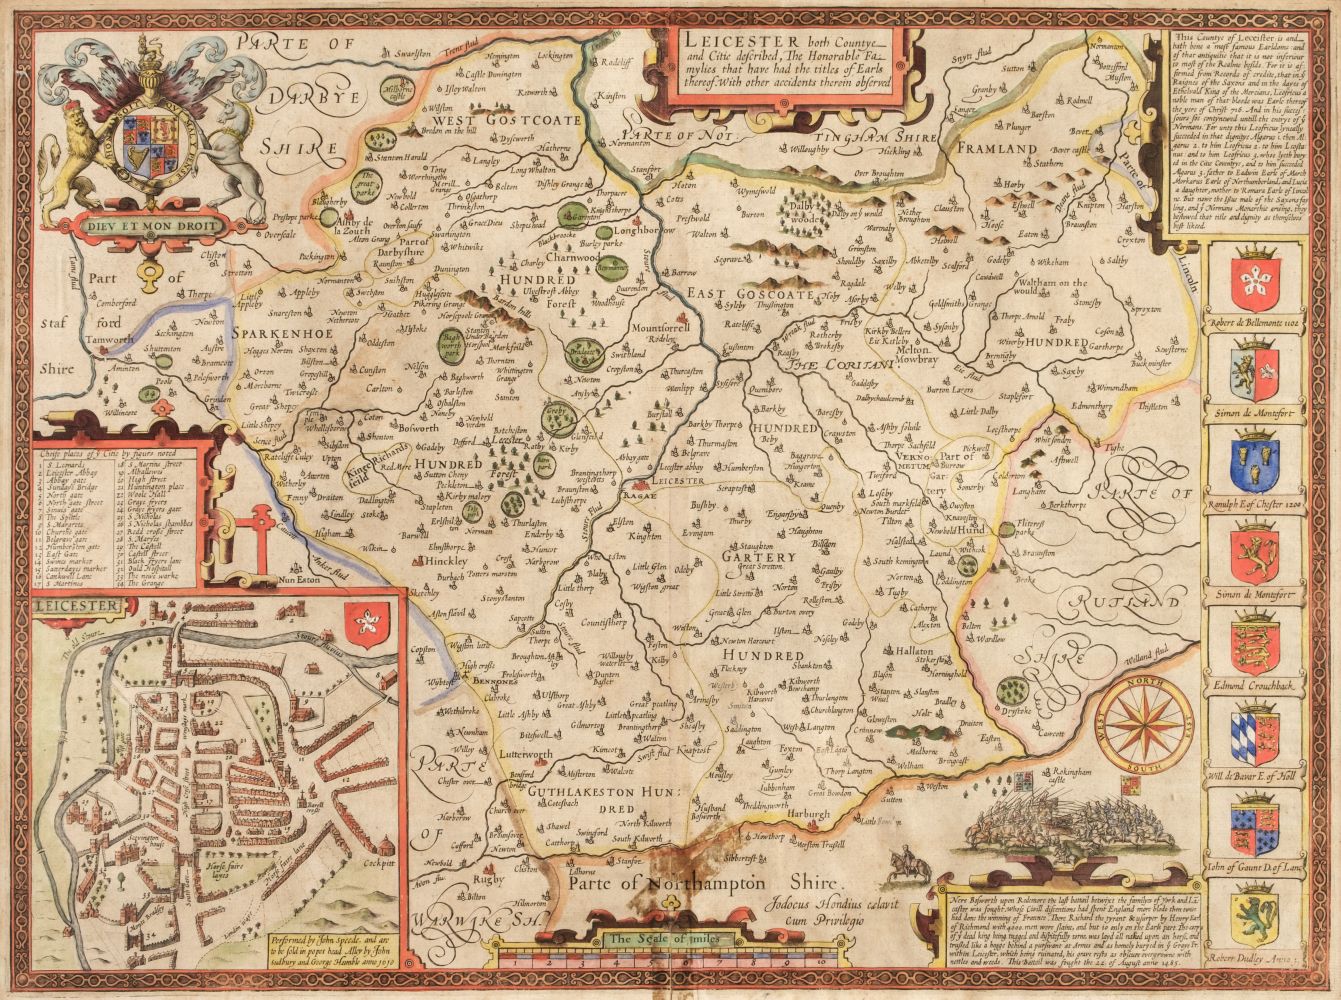 * Leicestershire. Speed (John), Leicester both Countye and Citie described..., circa 1627